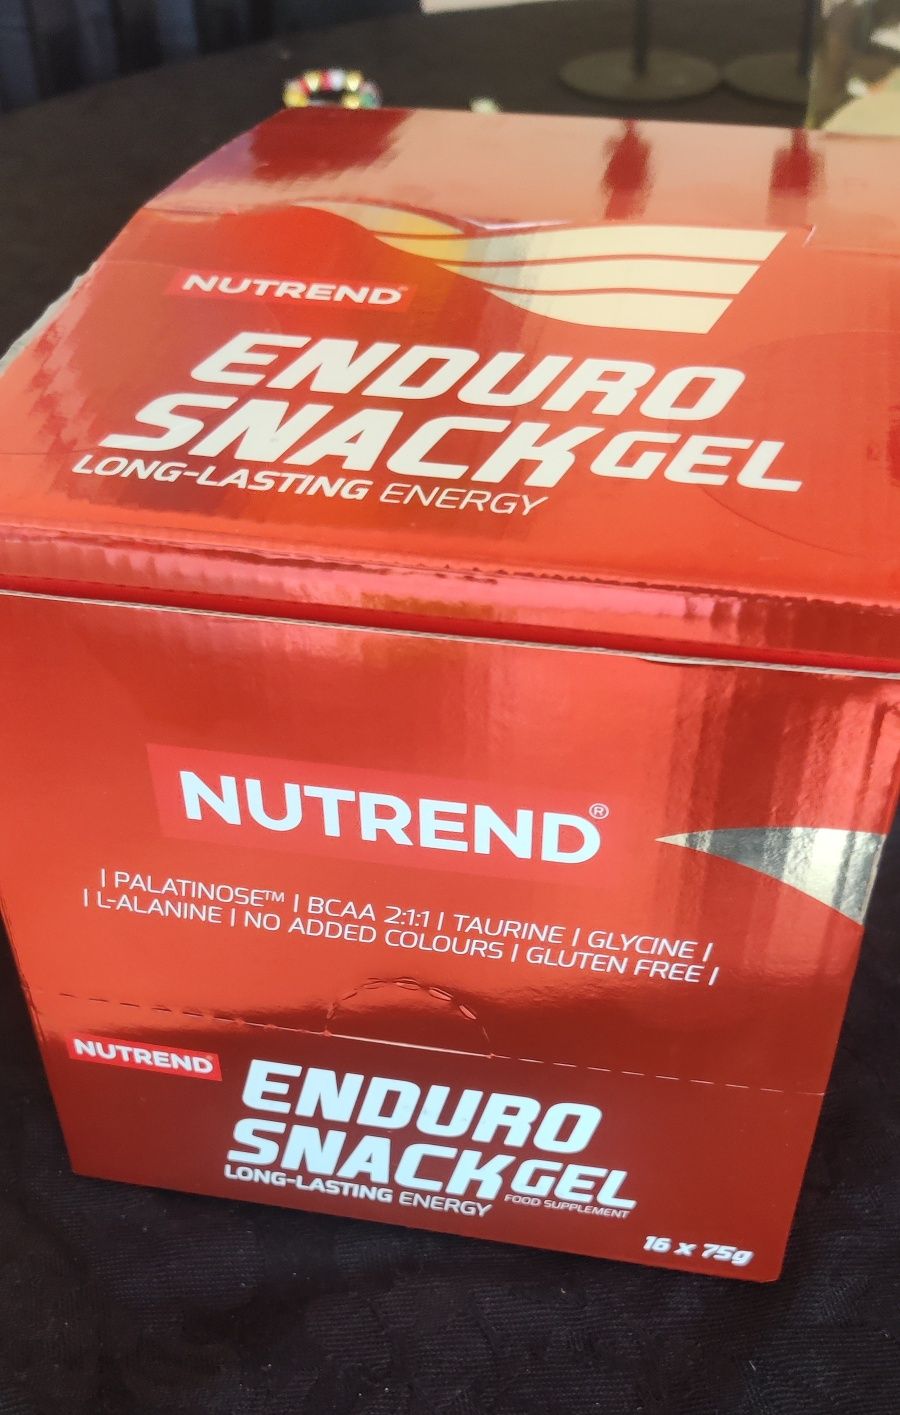 Pre workout Enduro Snack Gel